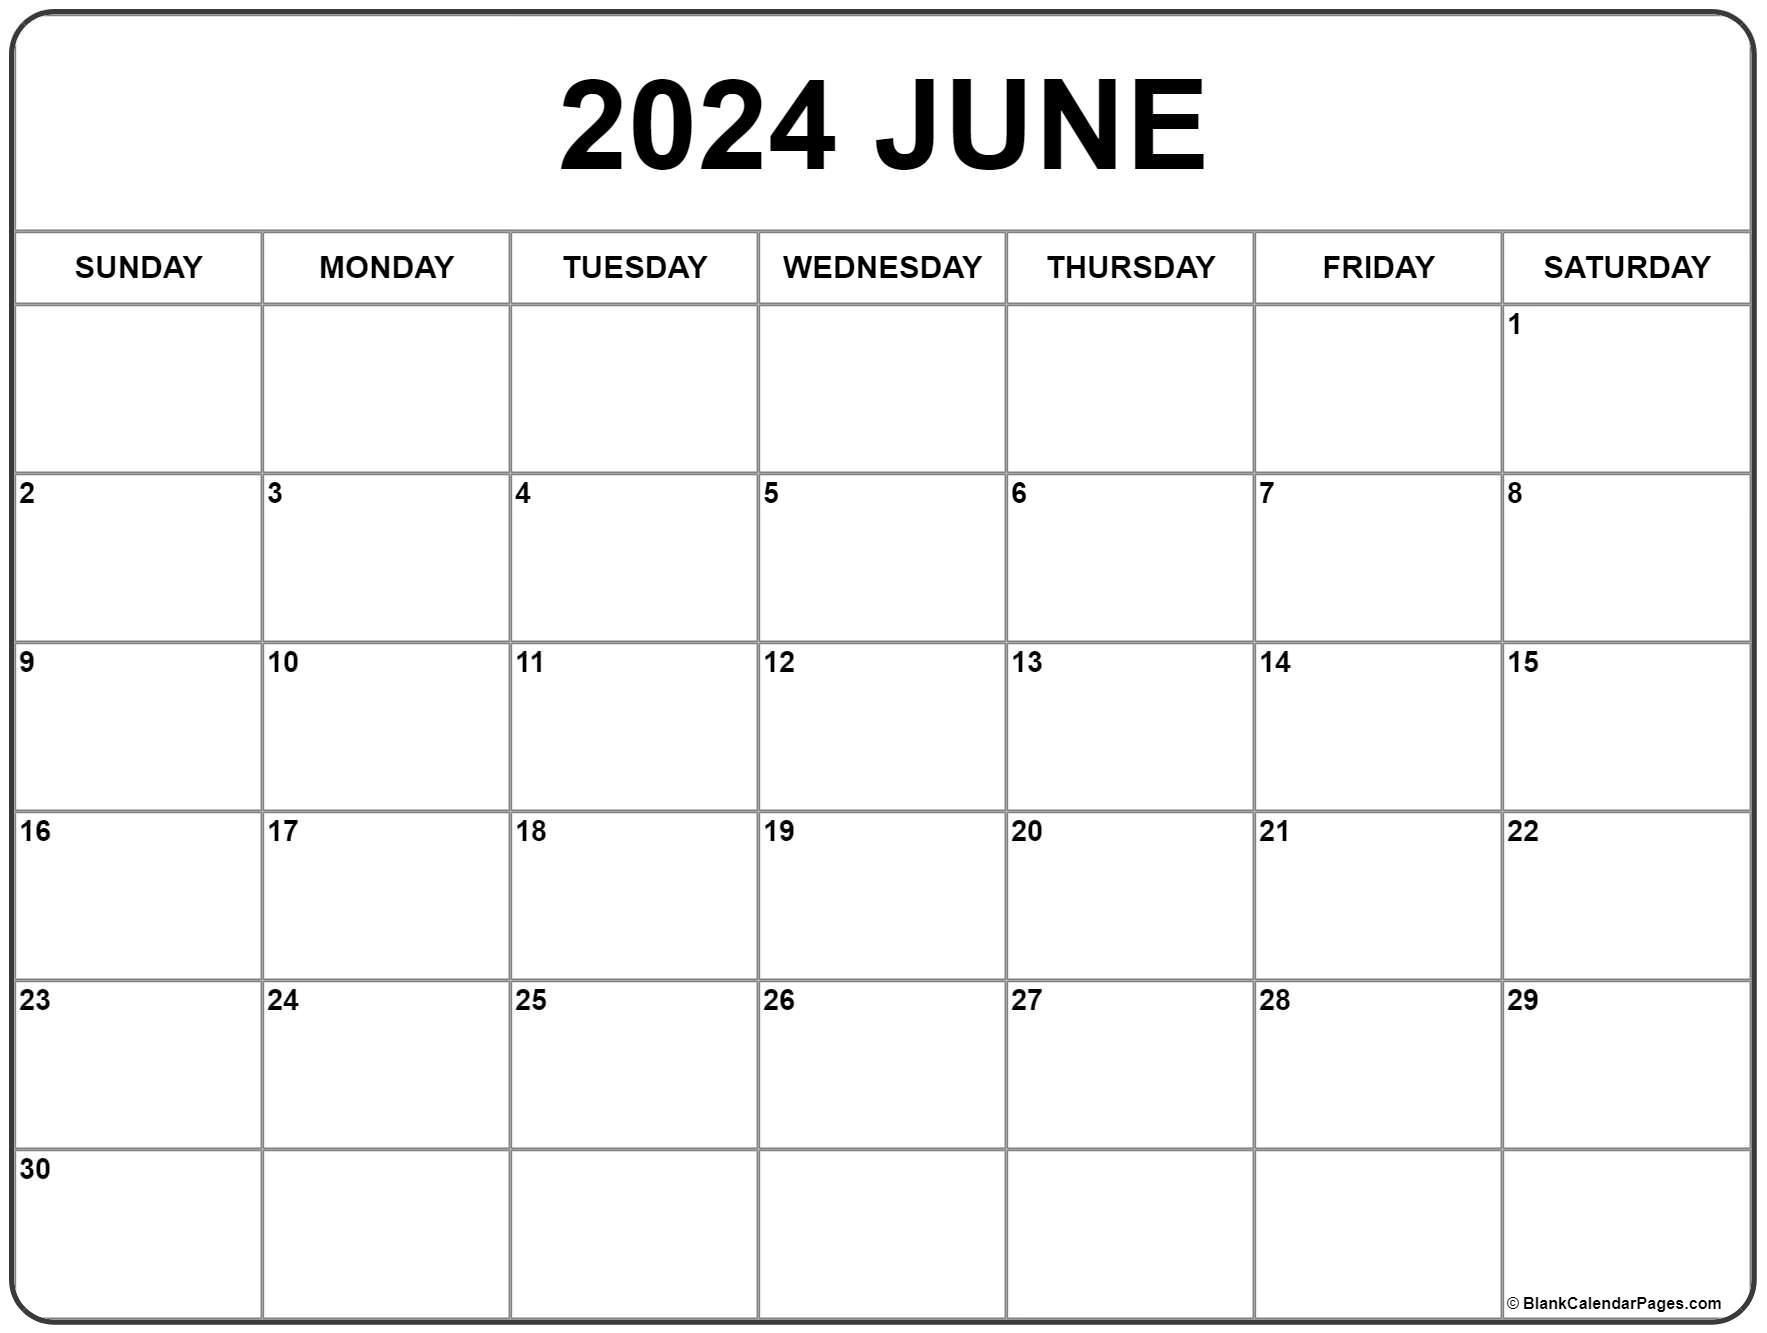 Free Printable June 2021 Calendar June 2021 calendar | free printable monthly calendars